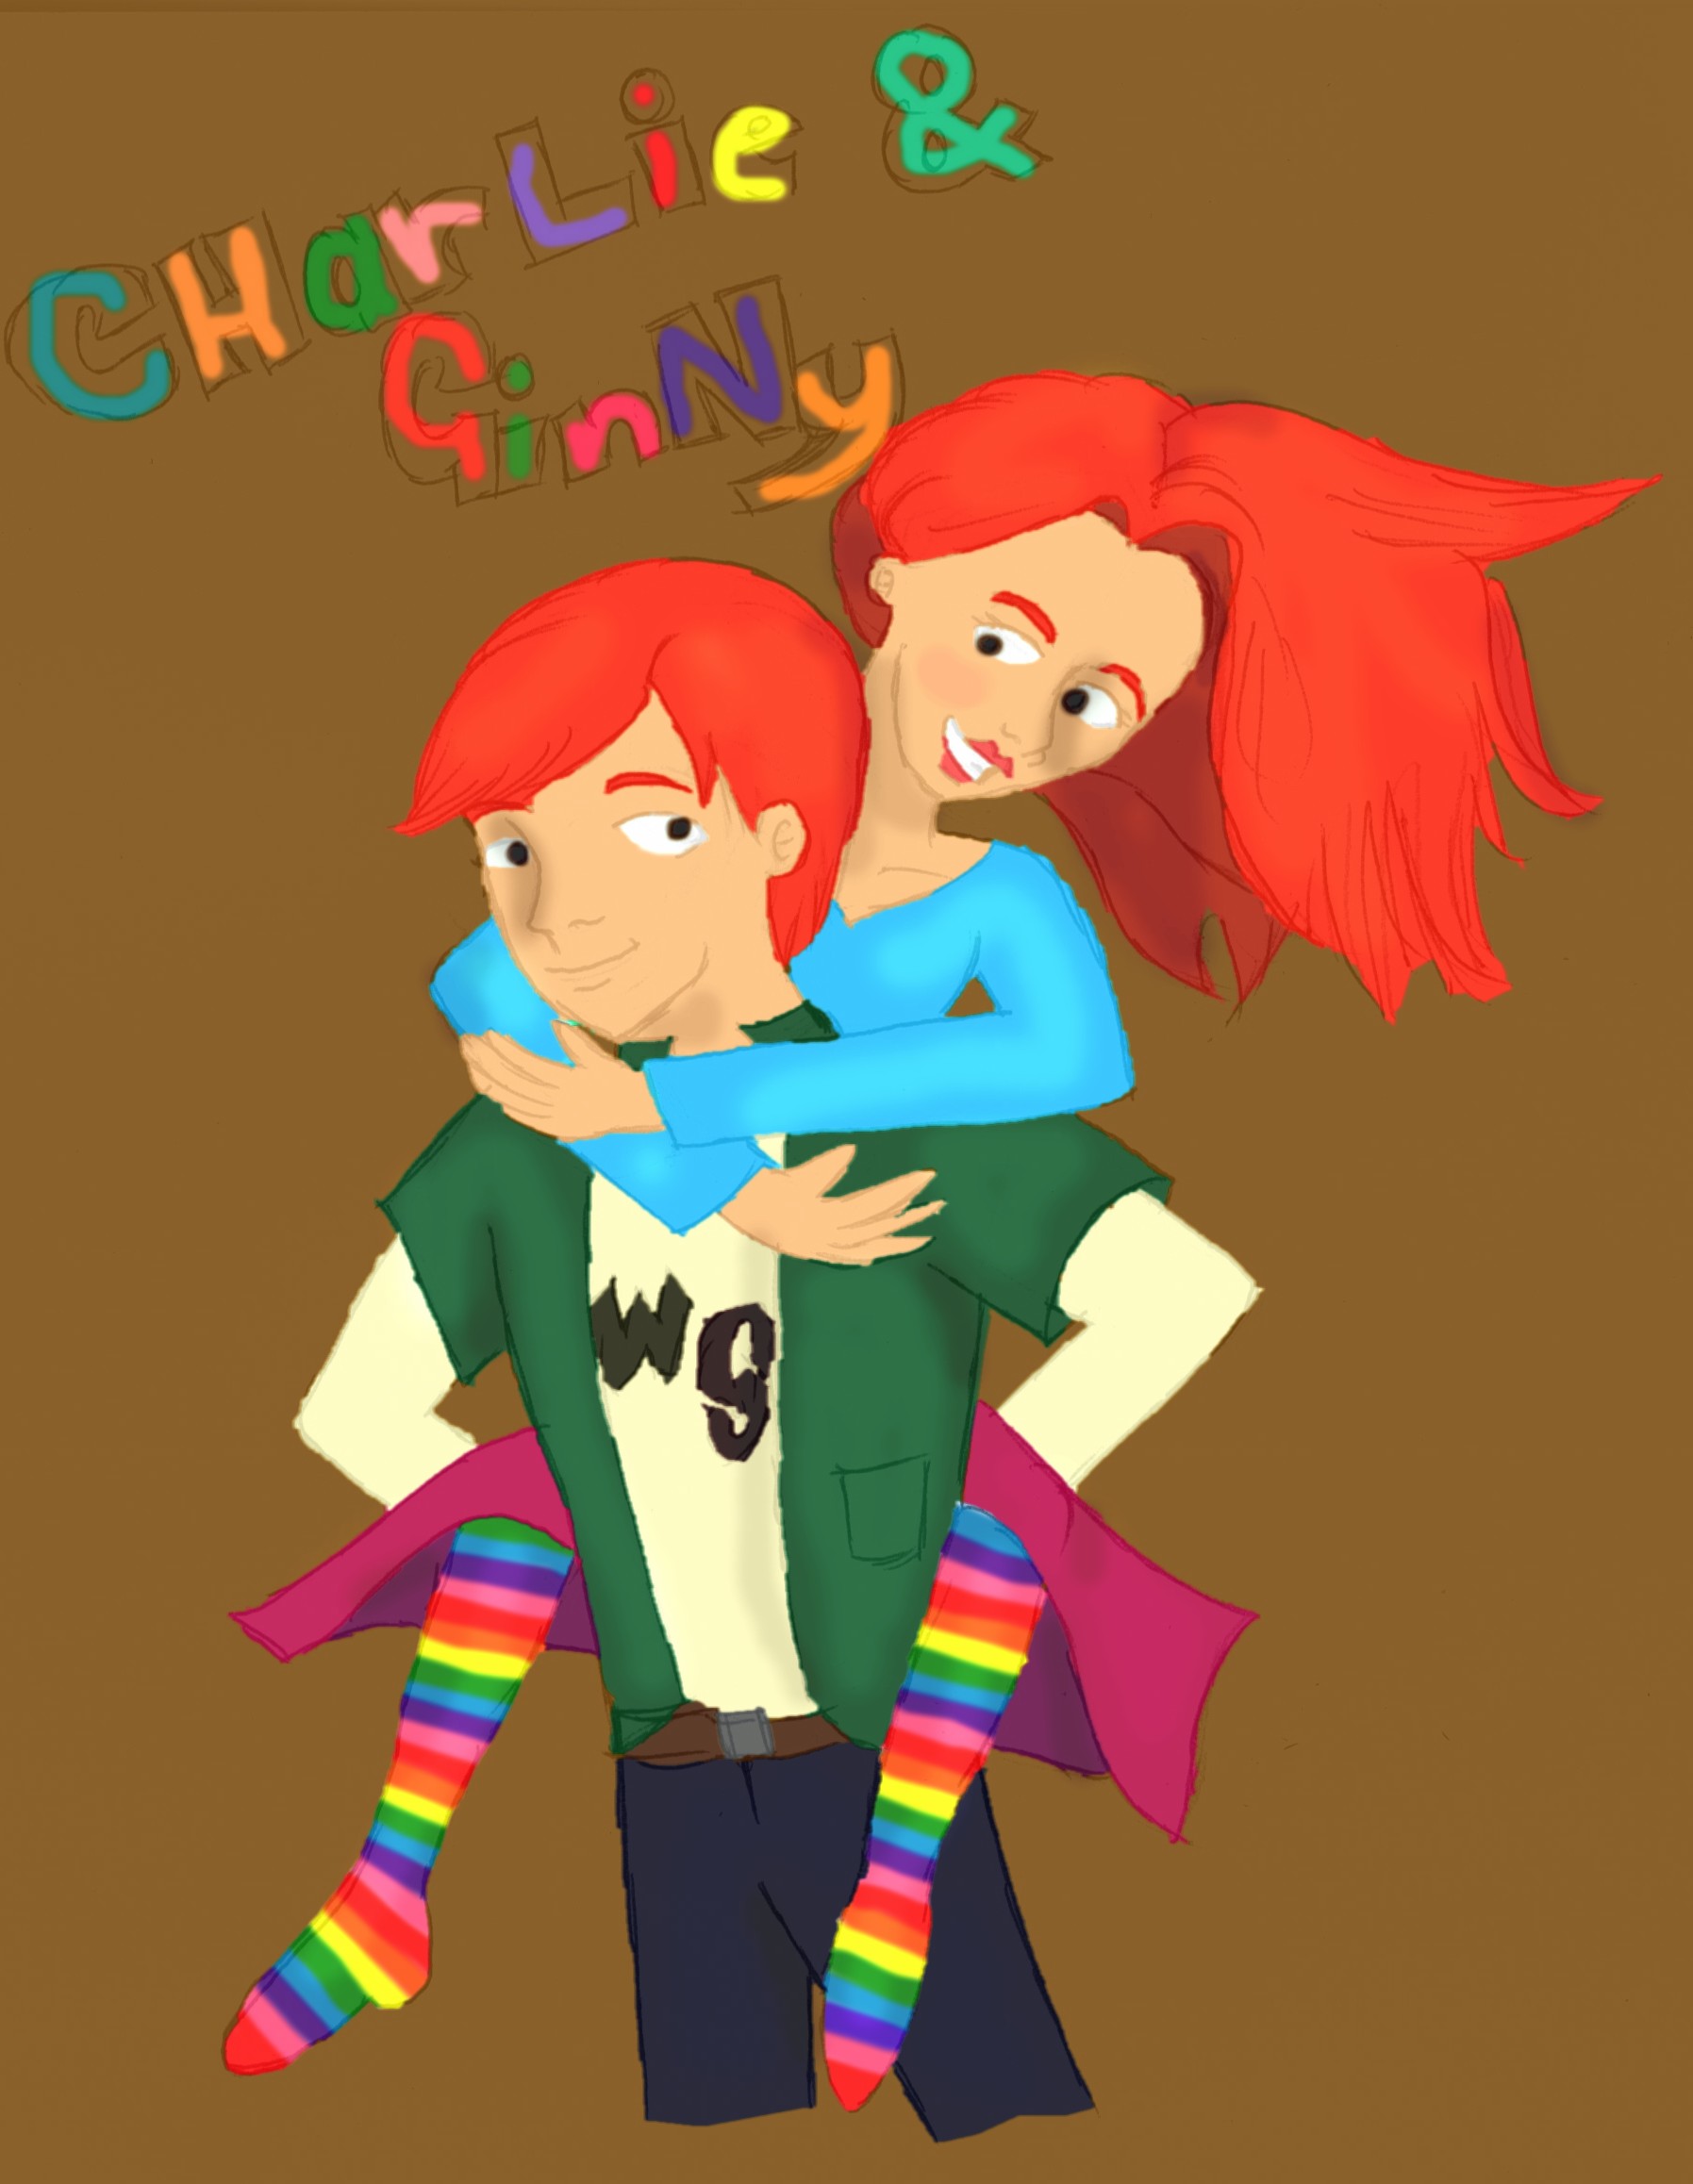 Charlie &amp; Ginny by xDragon_Girlx